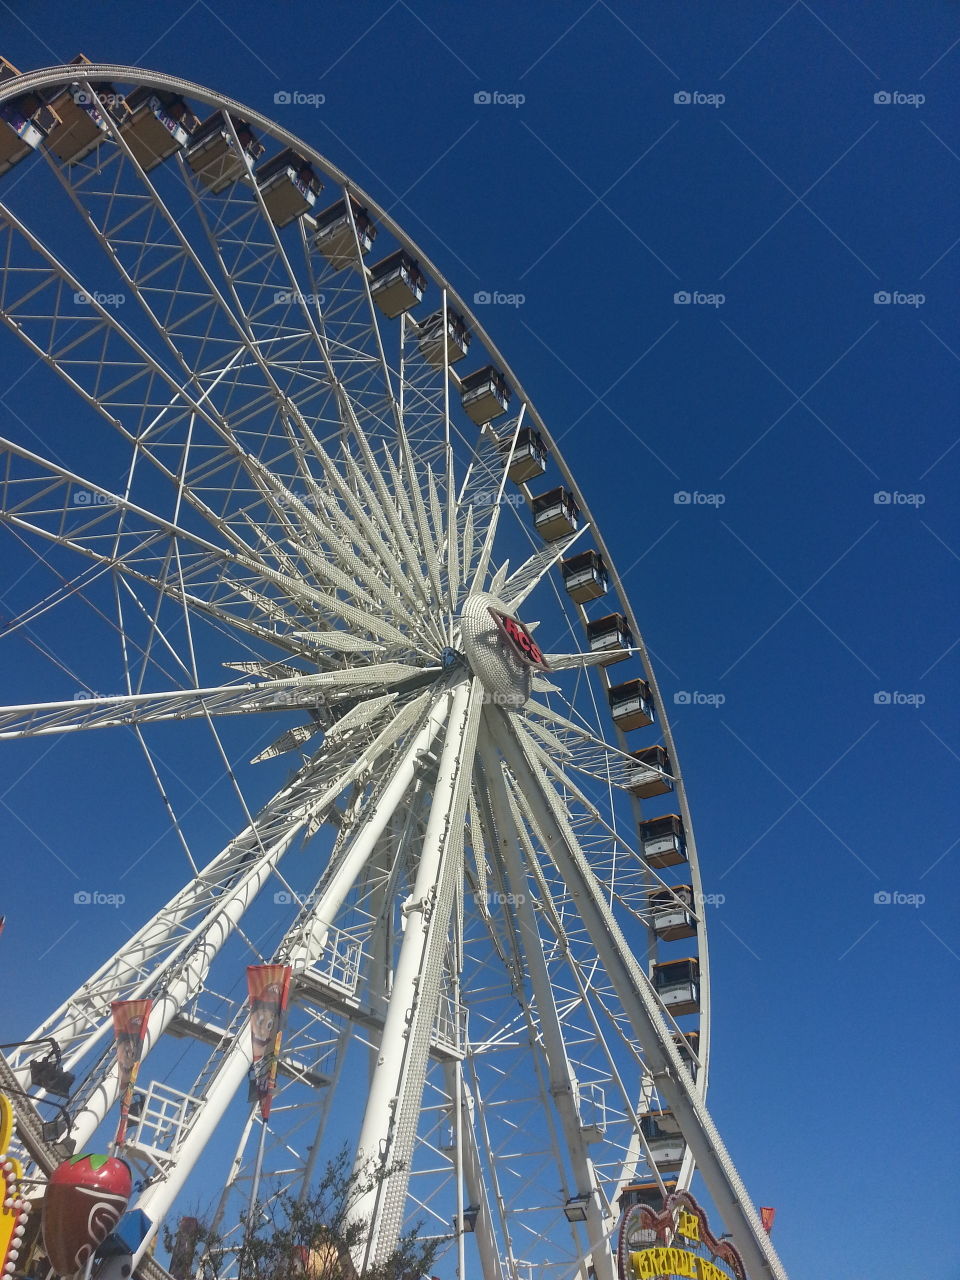 Carnival, Entertainment, Ferris Wheel, Carousel, Wheel